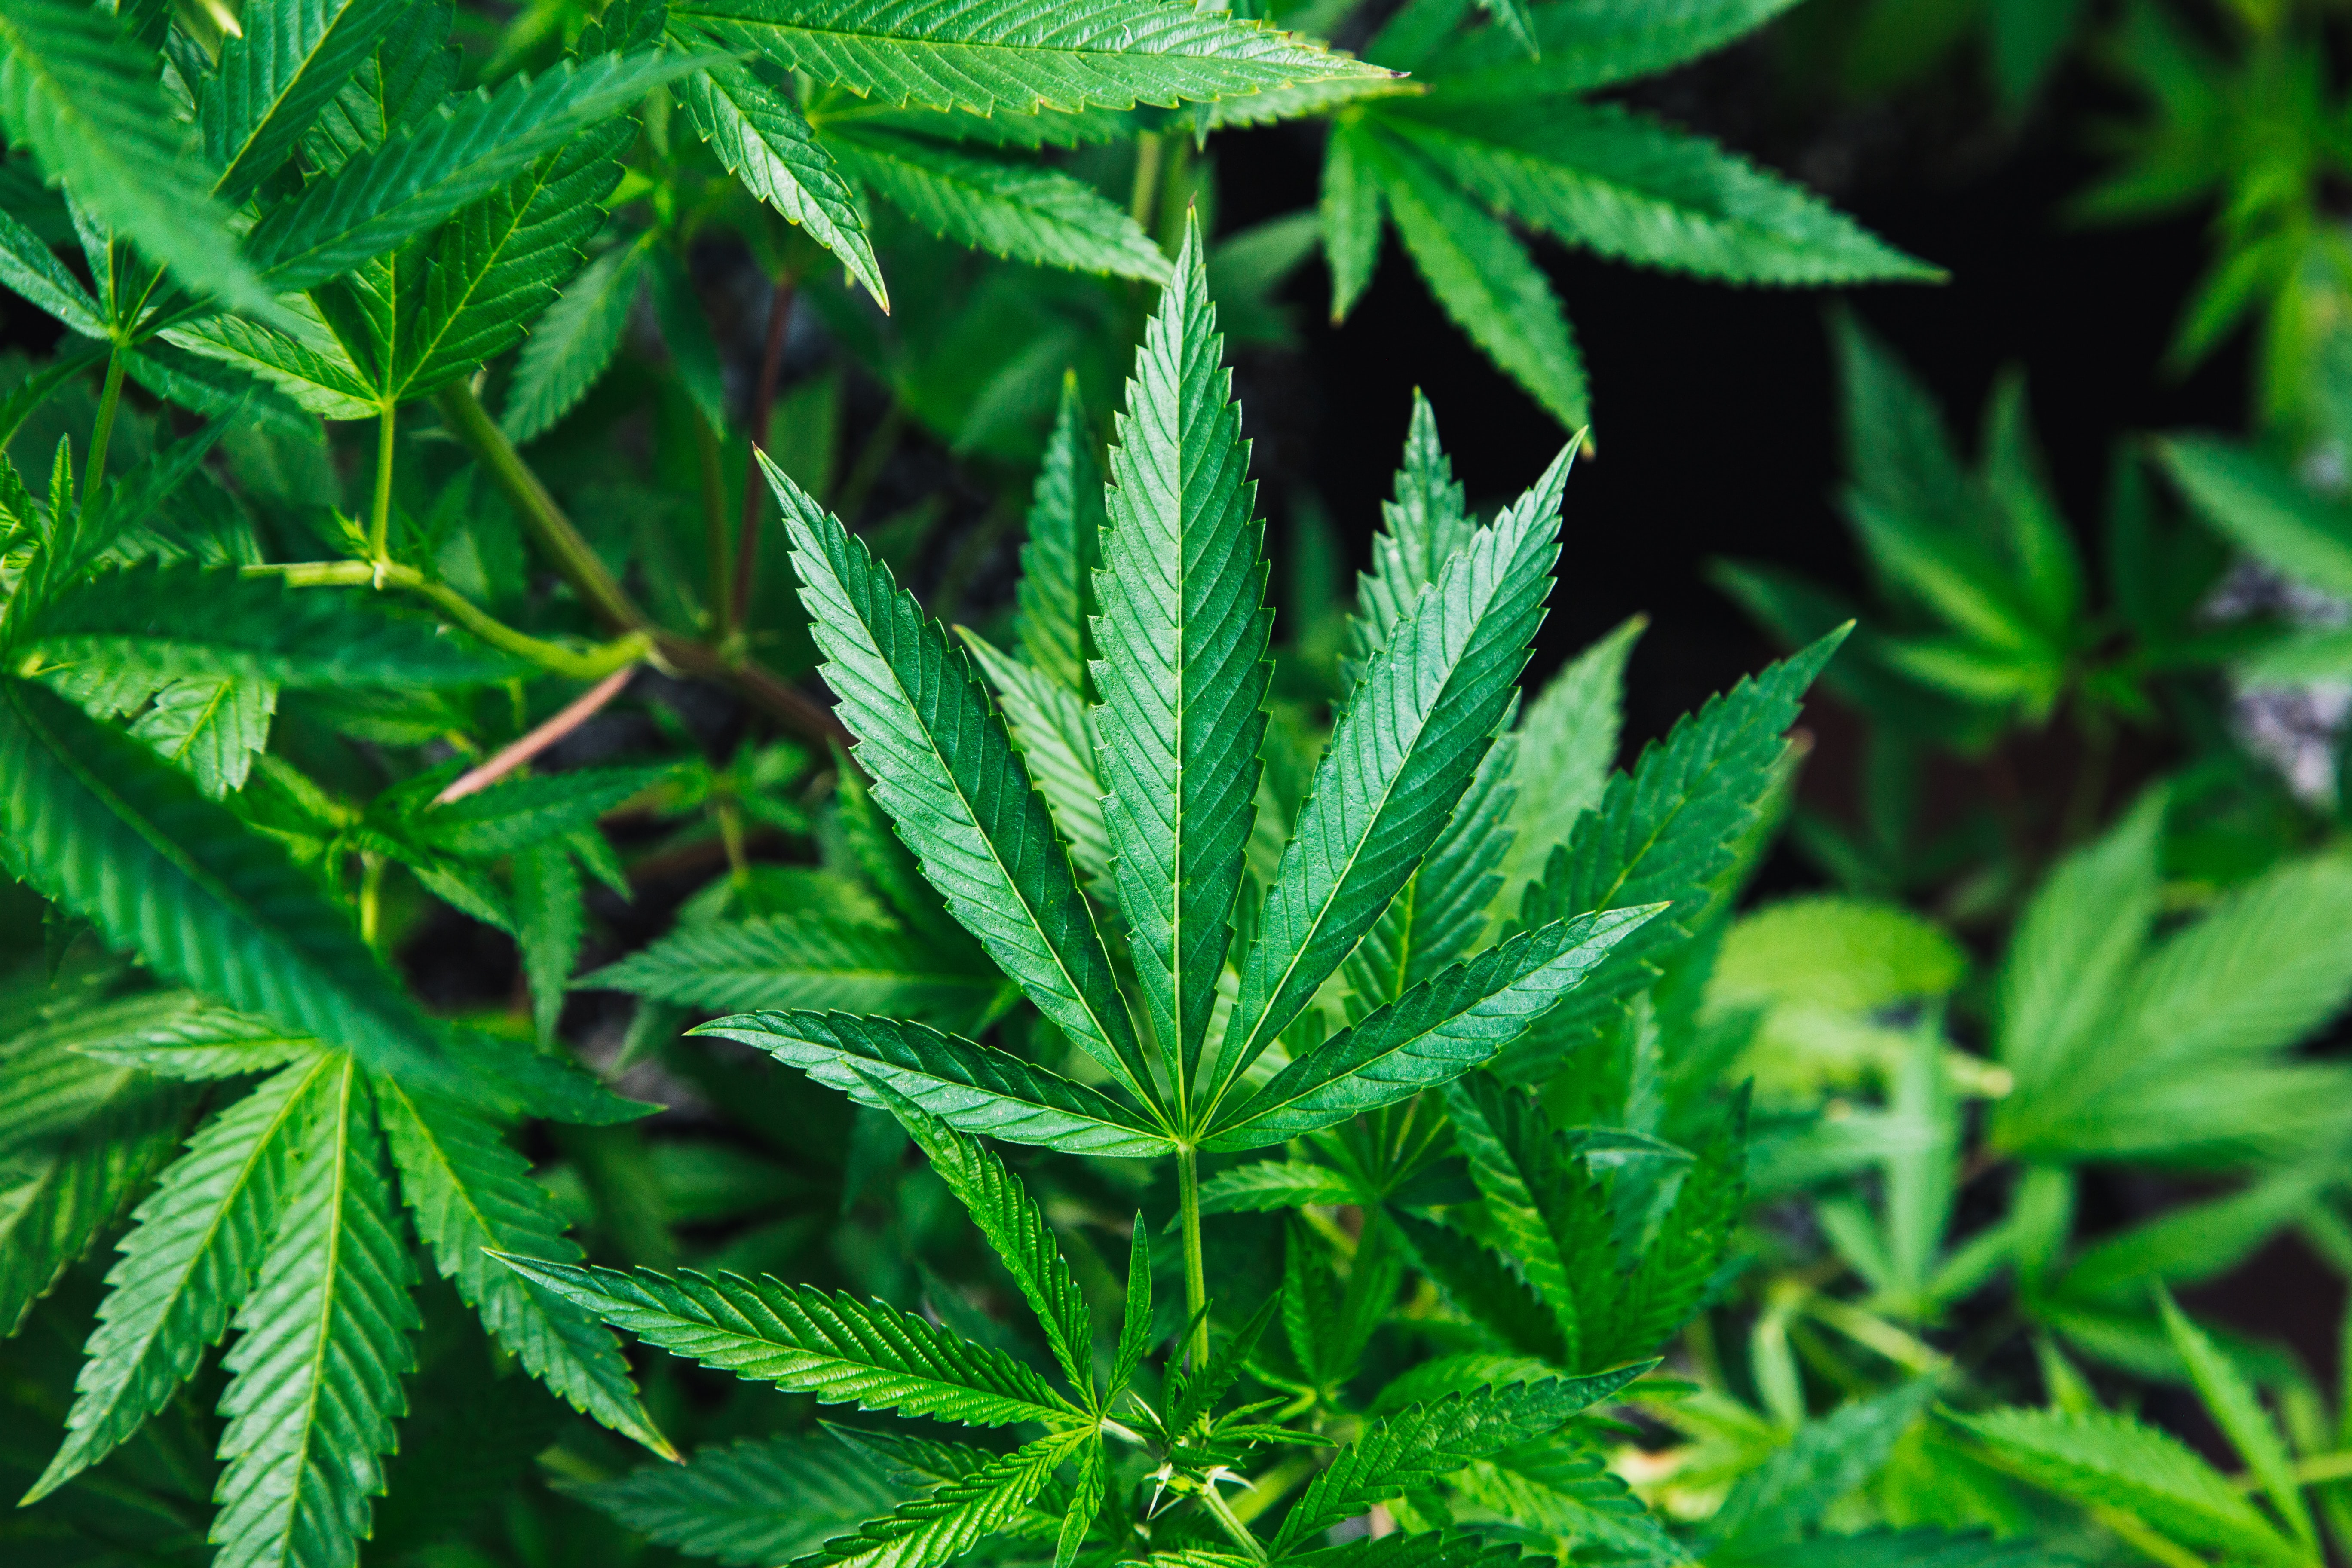 Green cannabis plant close-up photography; image by Rick Proctor, via Unsplash.com.